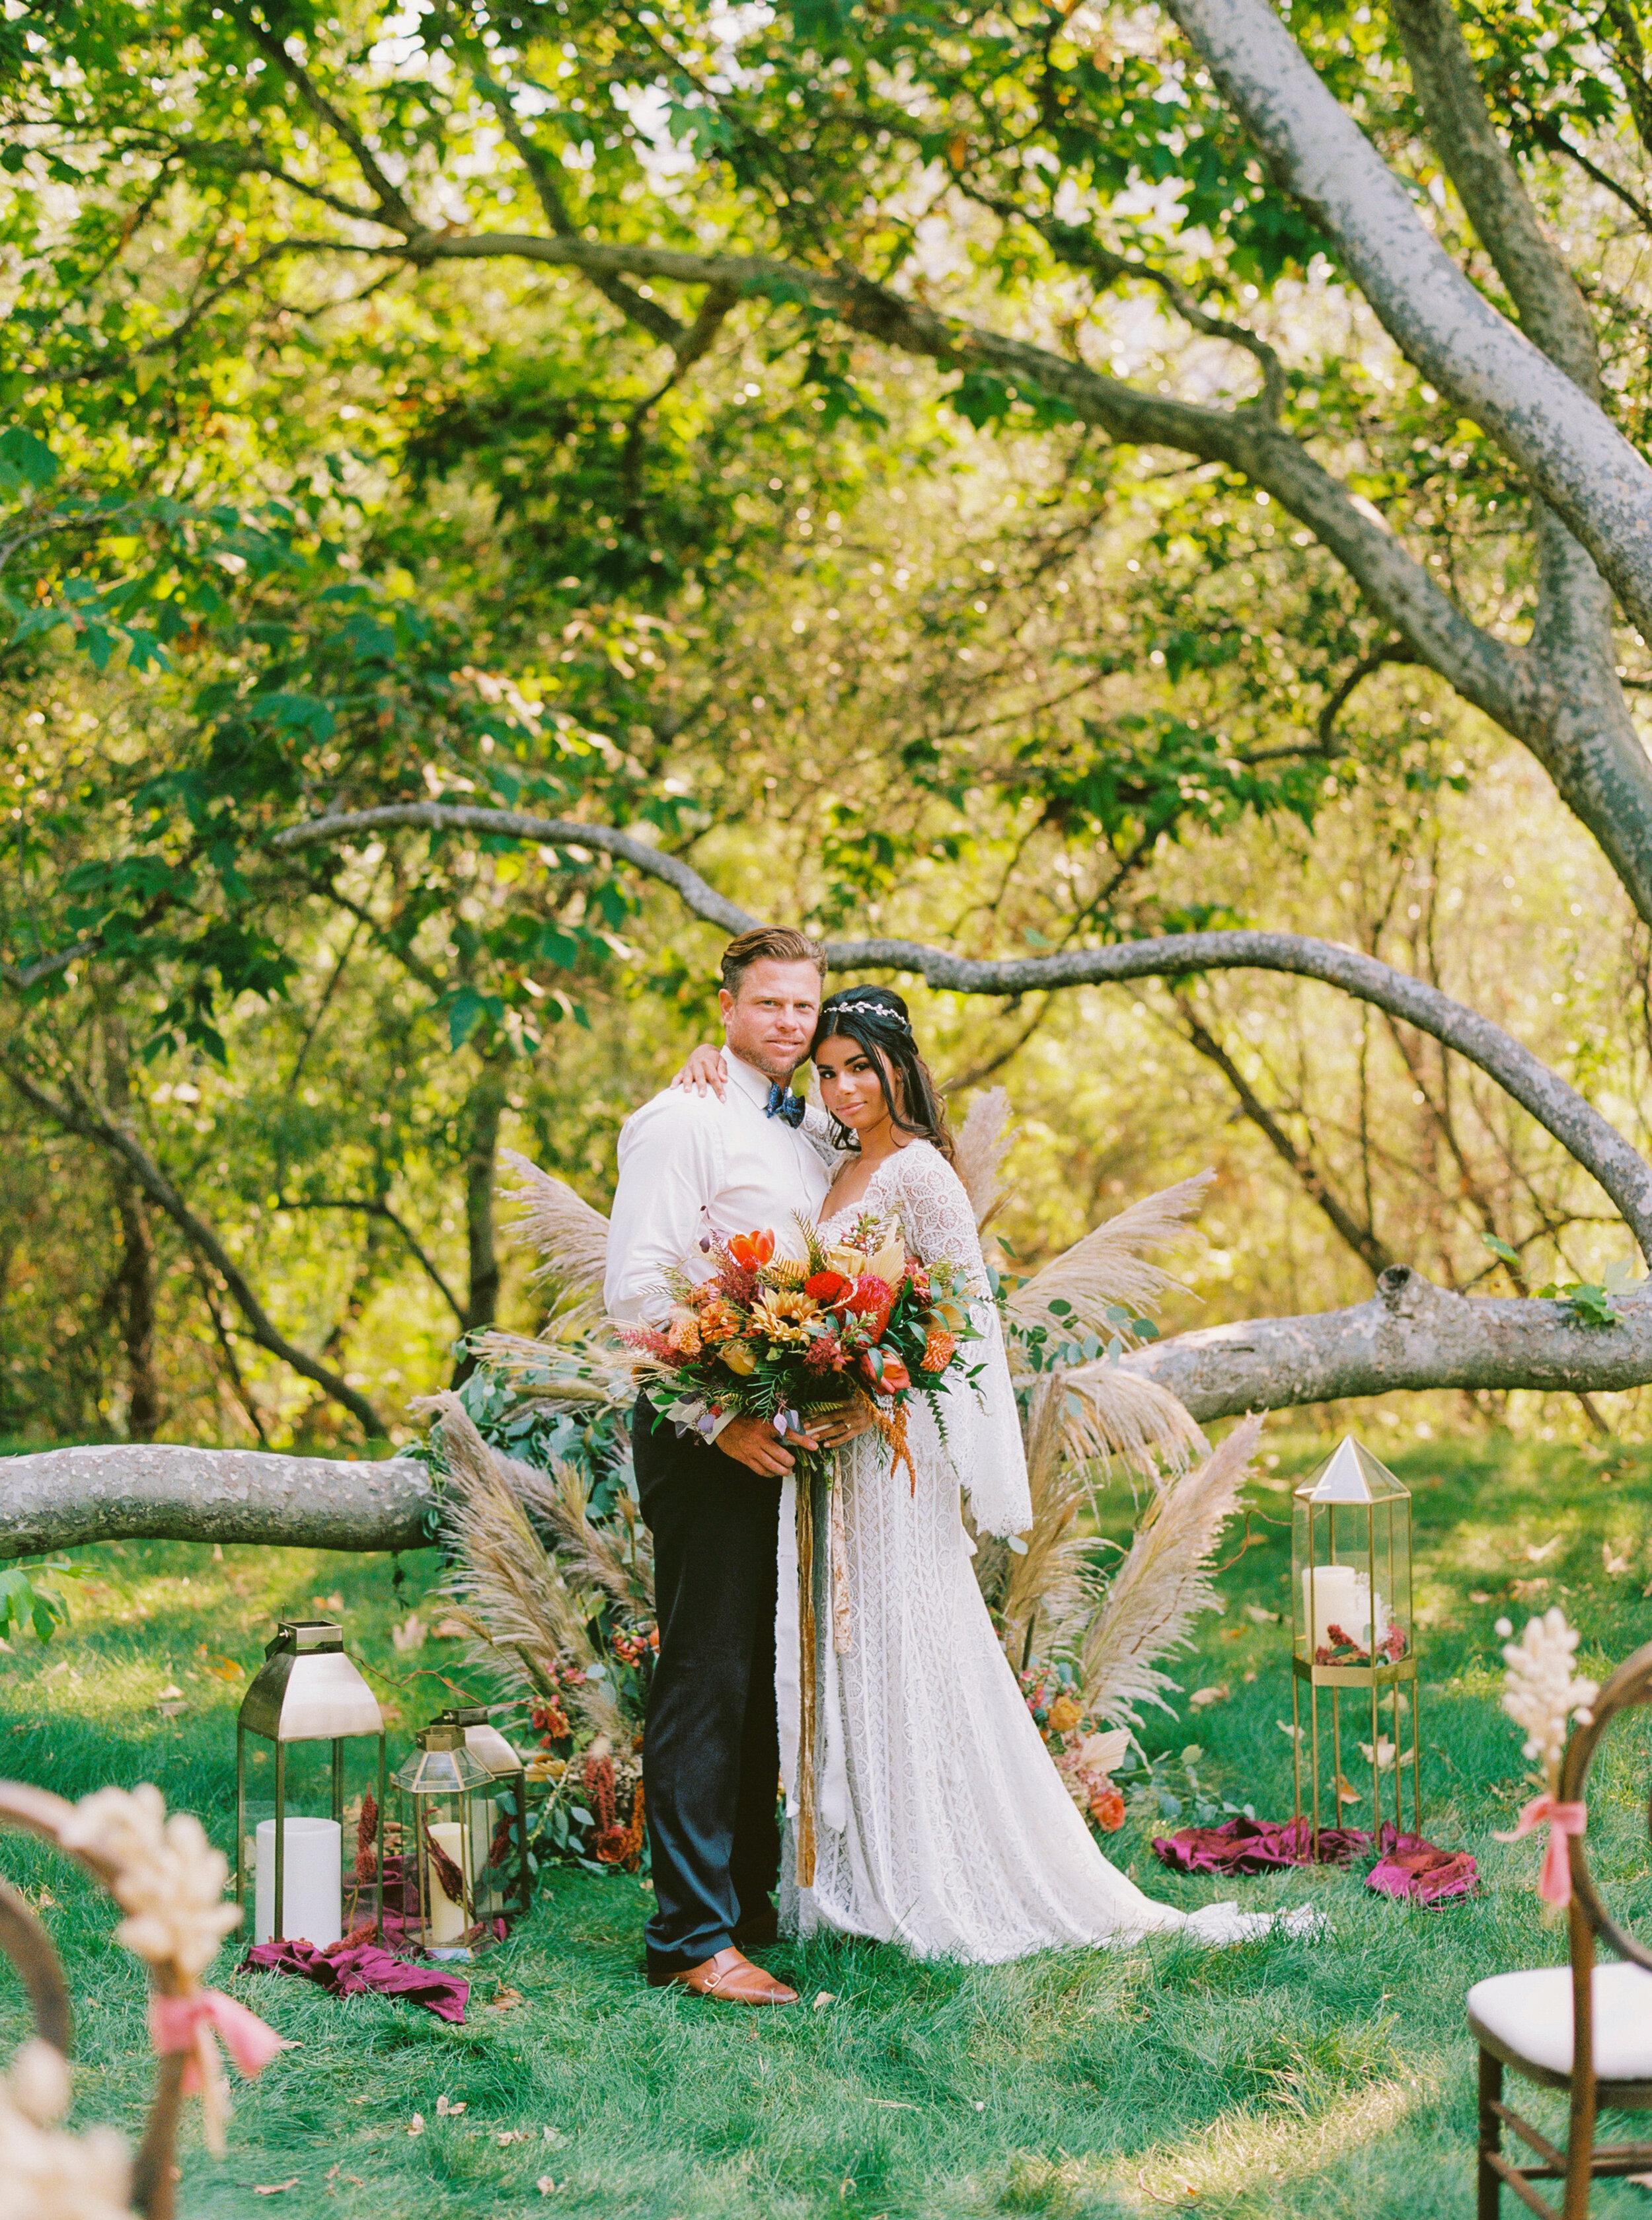 Sarahi Hadden - An Earthy Summer Boho Inspired Wedding with Sunset Hues at Gardener Ranch-88.jpg